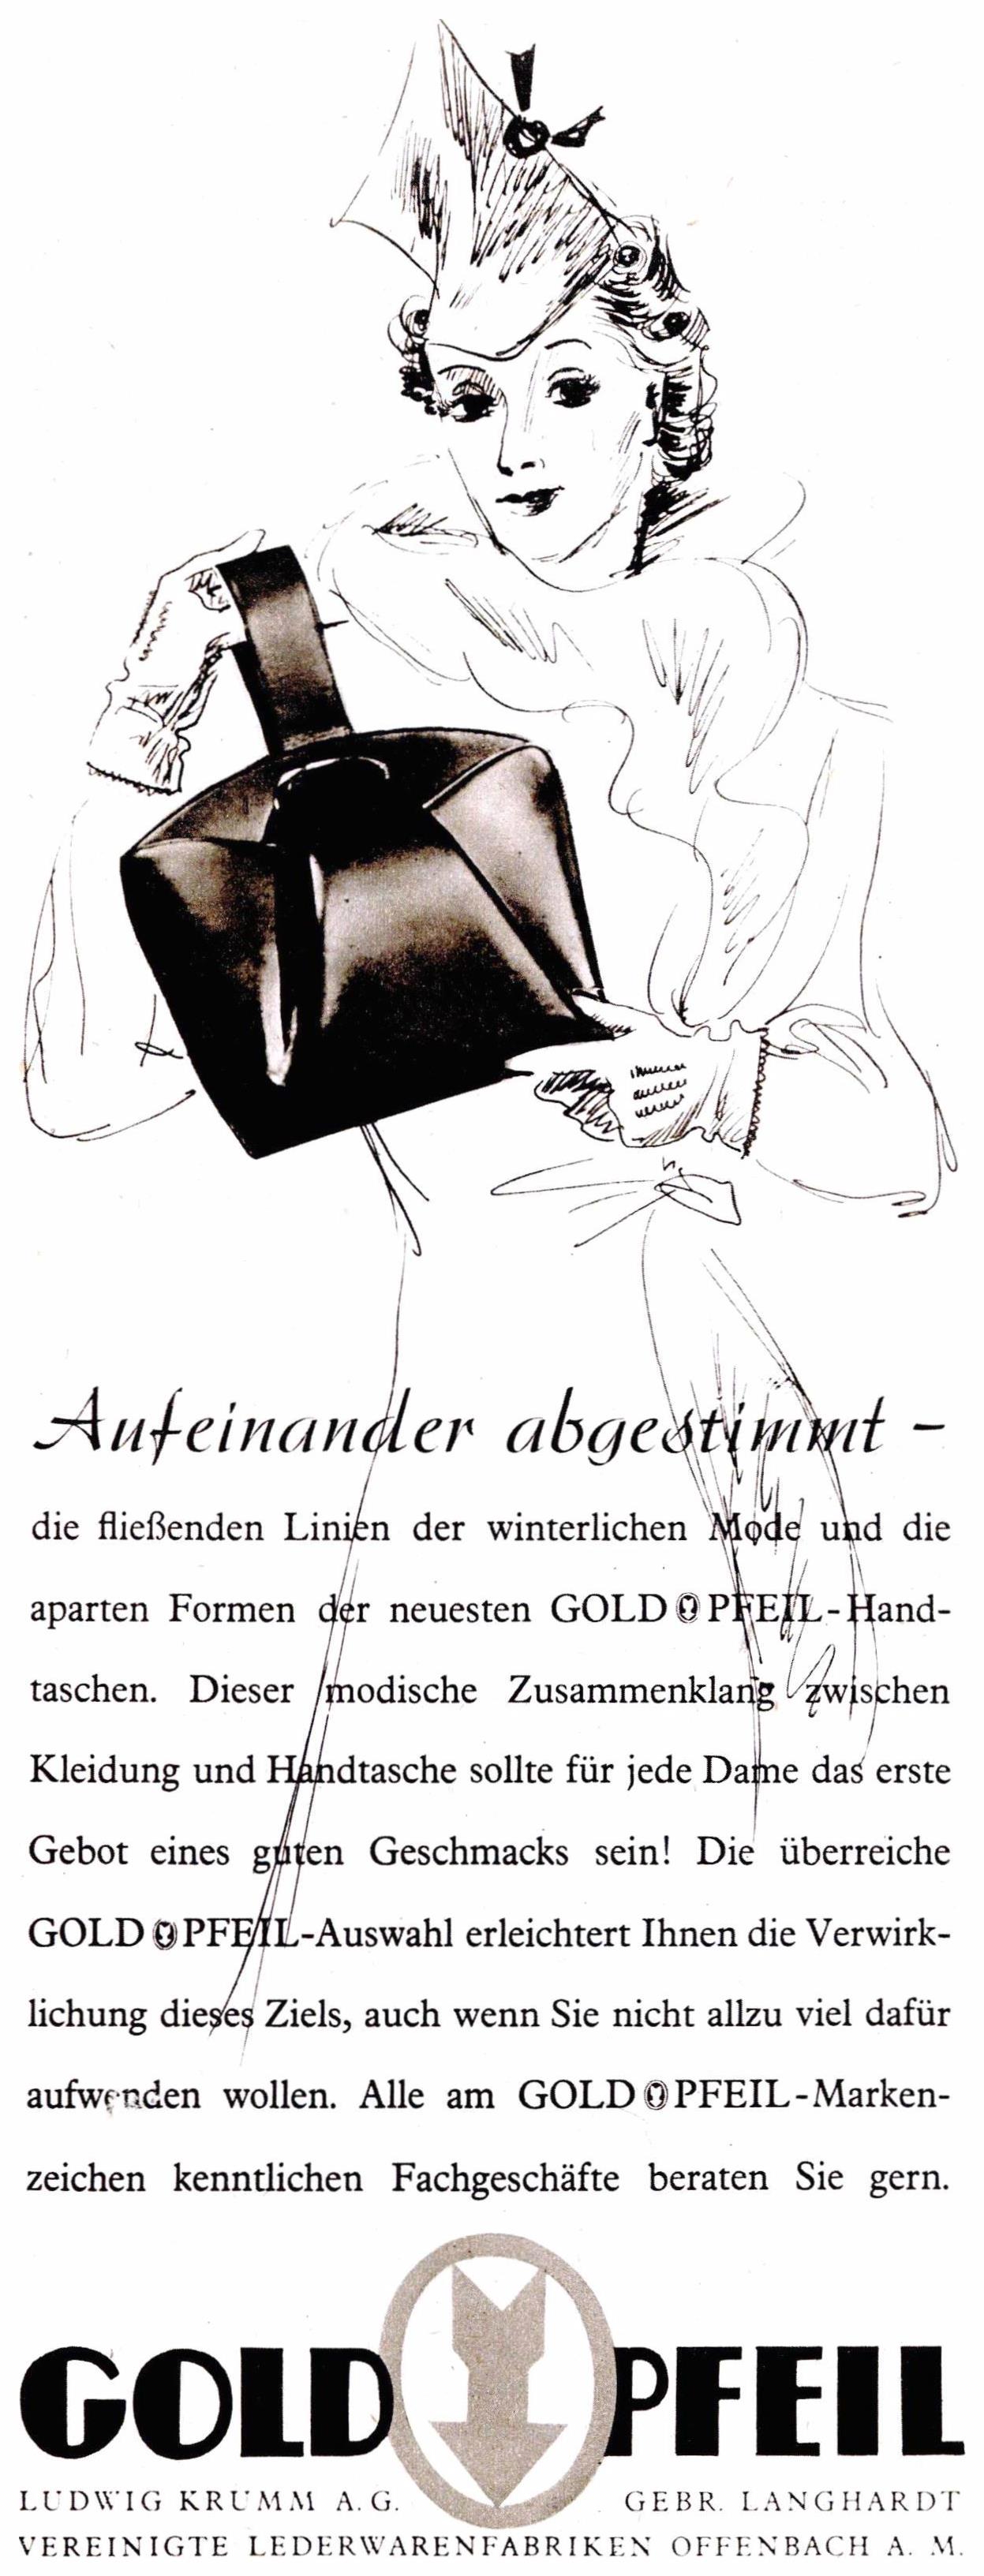 Goldpfeil 1937 0.jpg